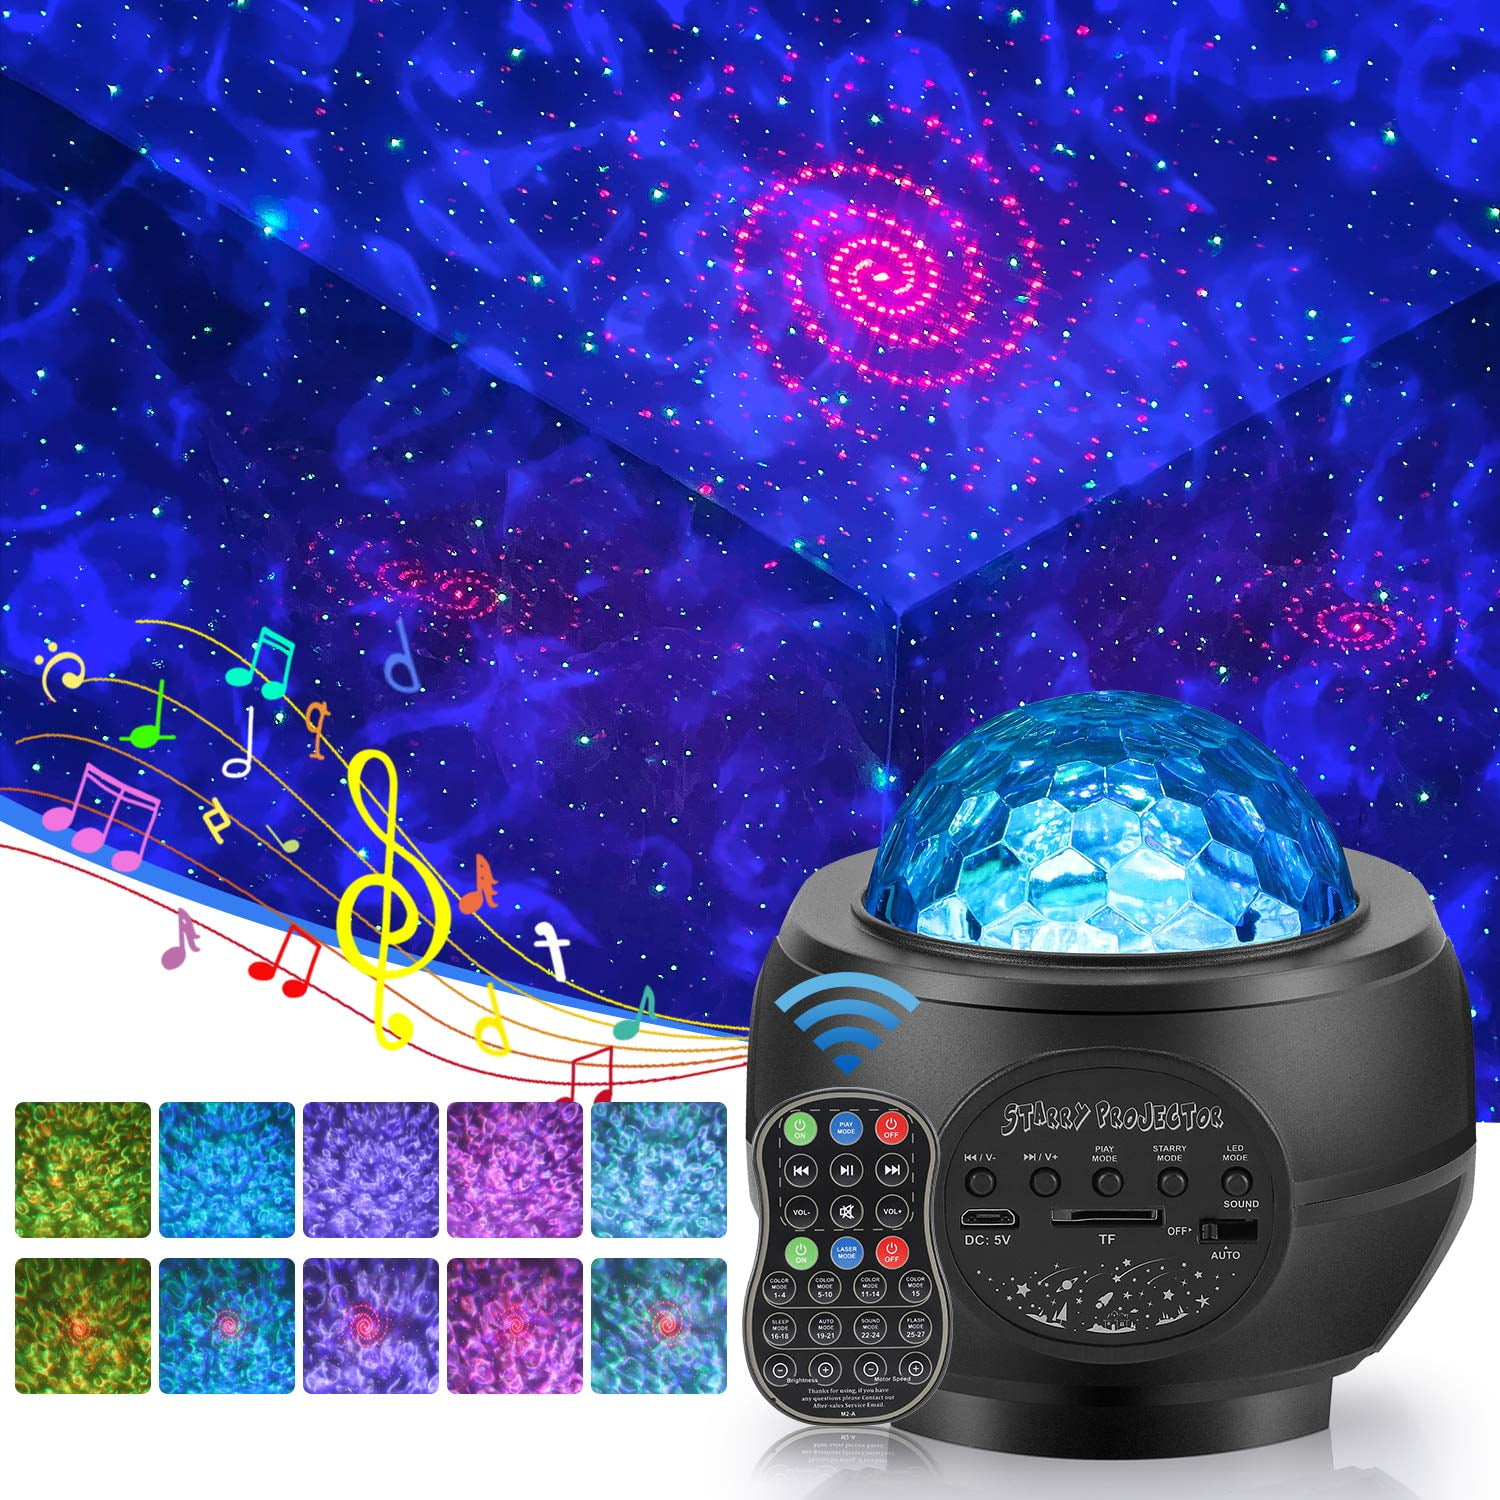 Toyuugo Galaxy Light Projector Night Light Starry Lamp Bluetooth Speaker with 